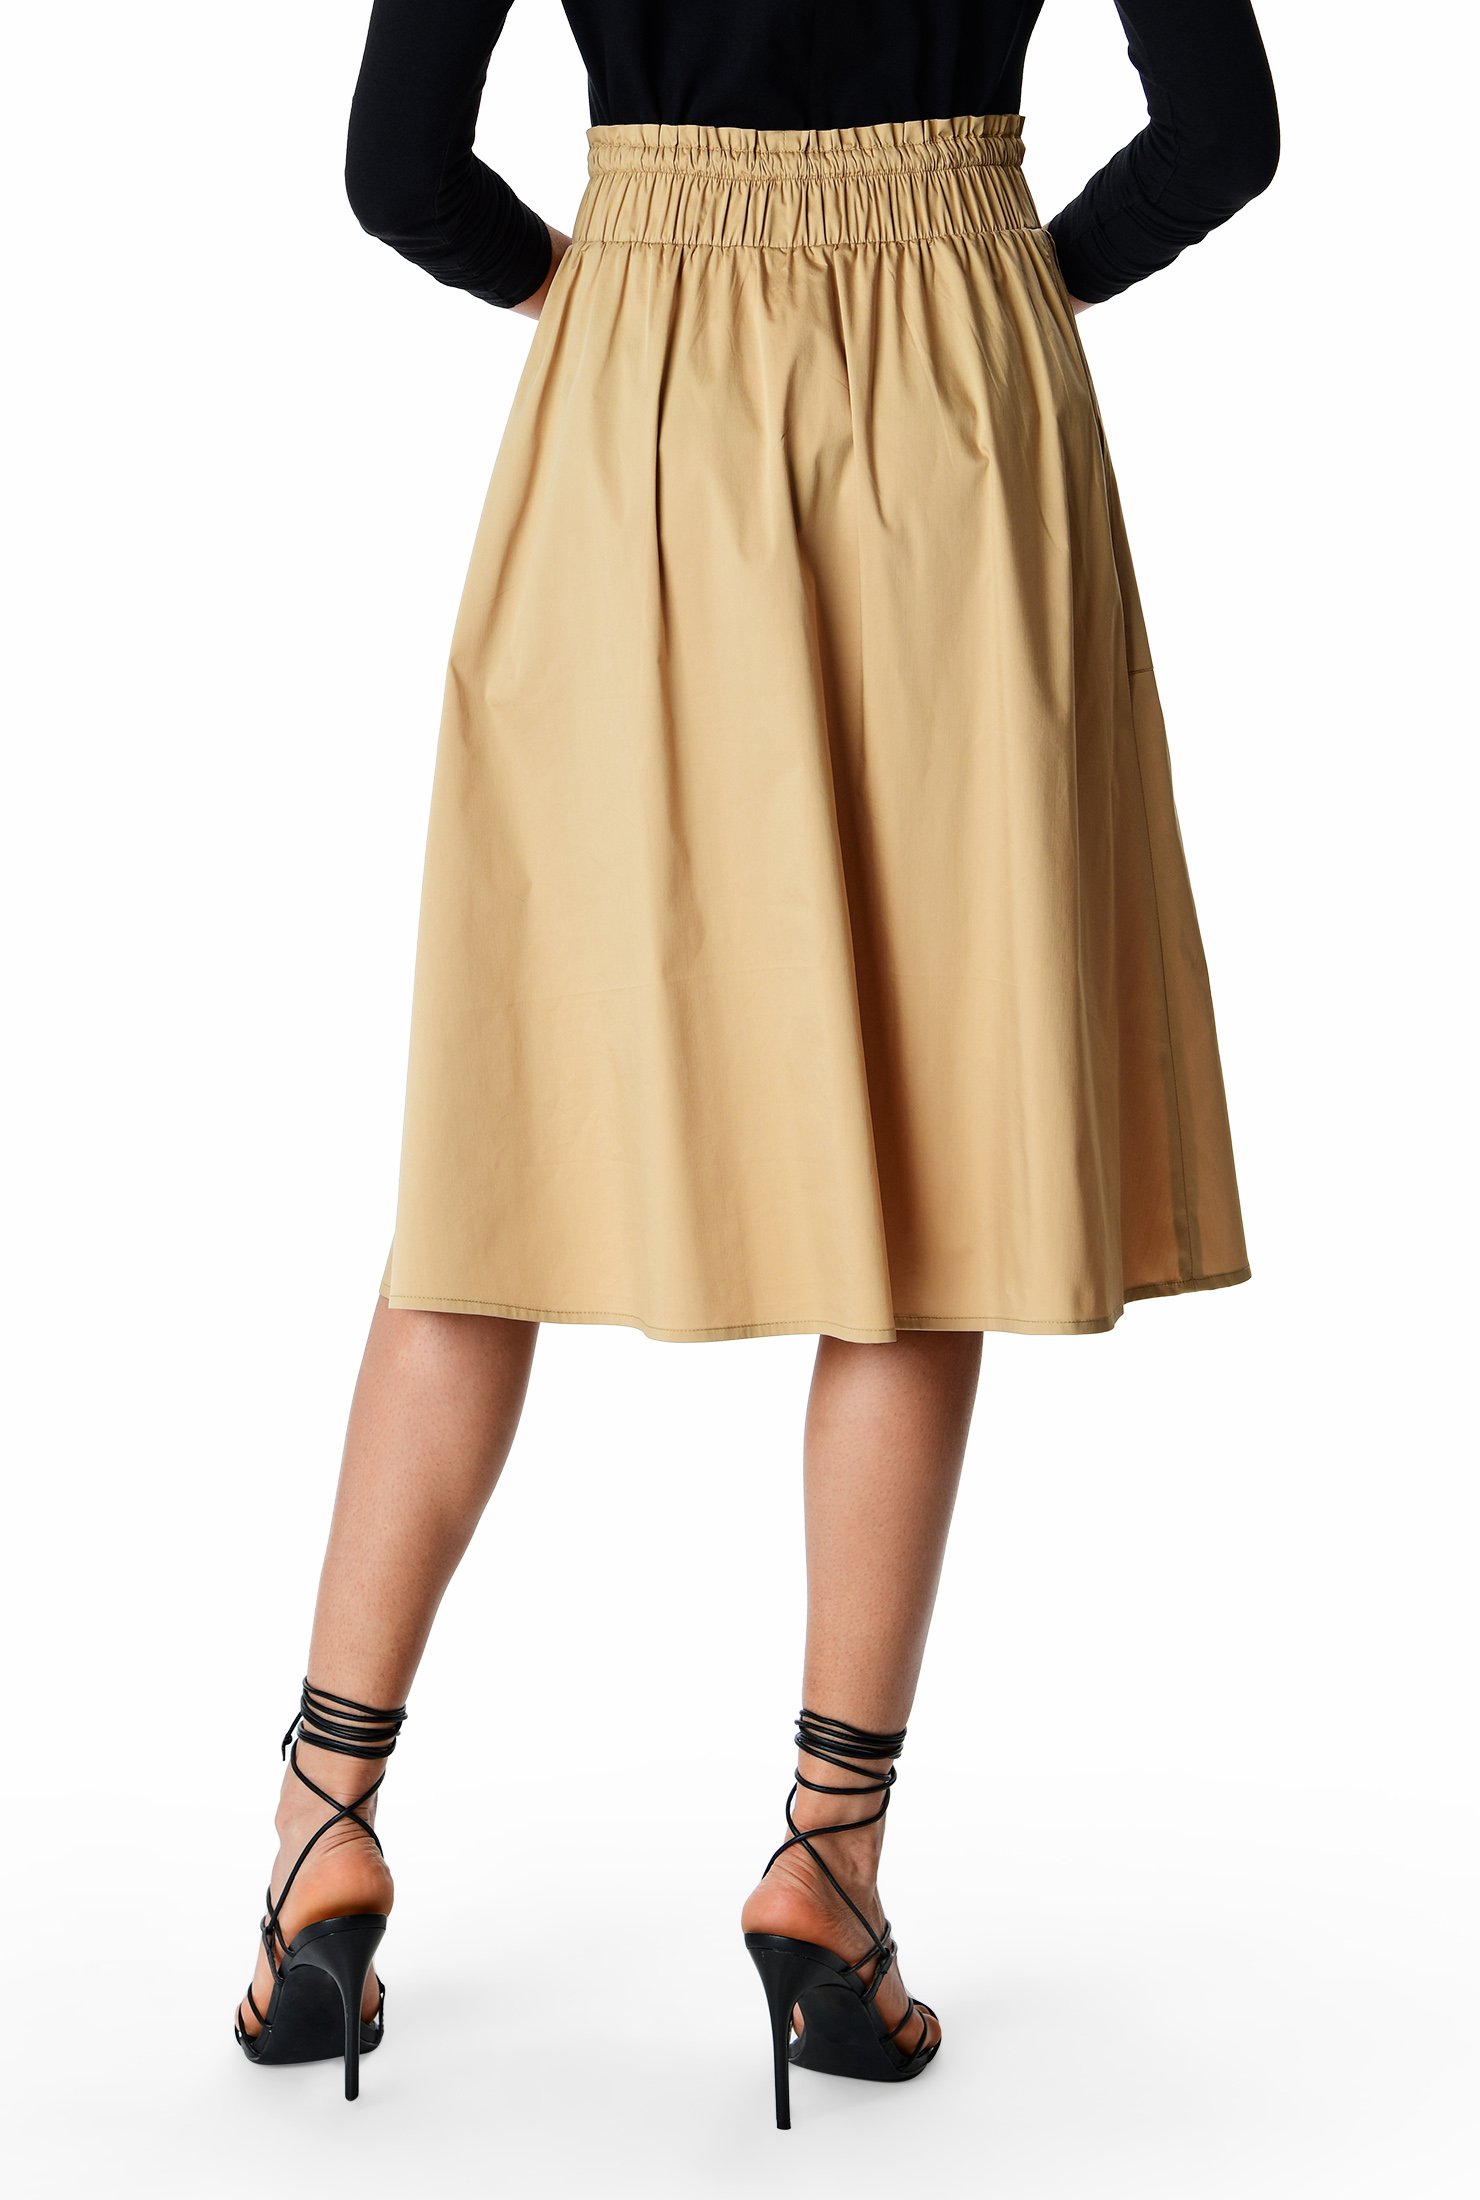 Shop Cotton sateen elastic waist skirt | eShakti